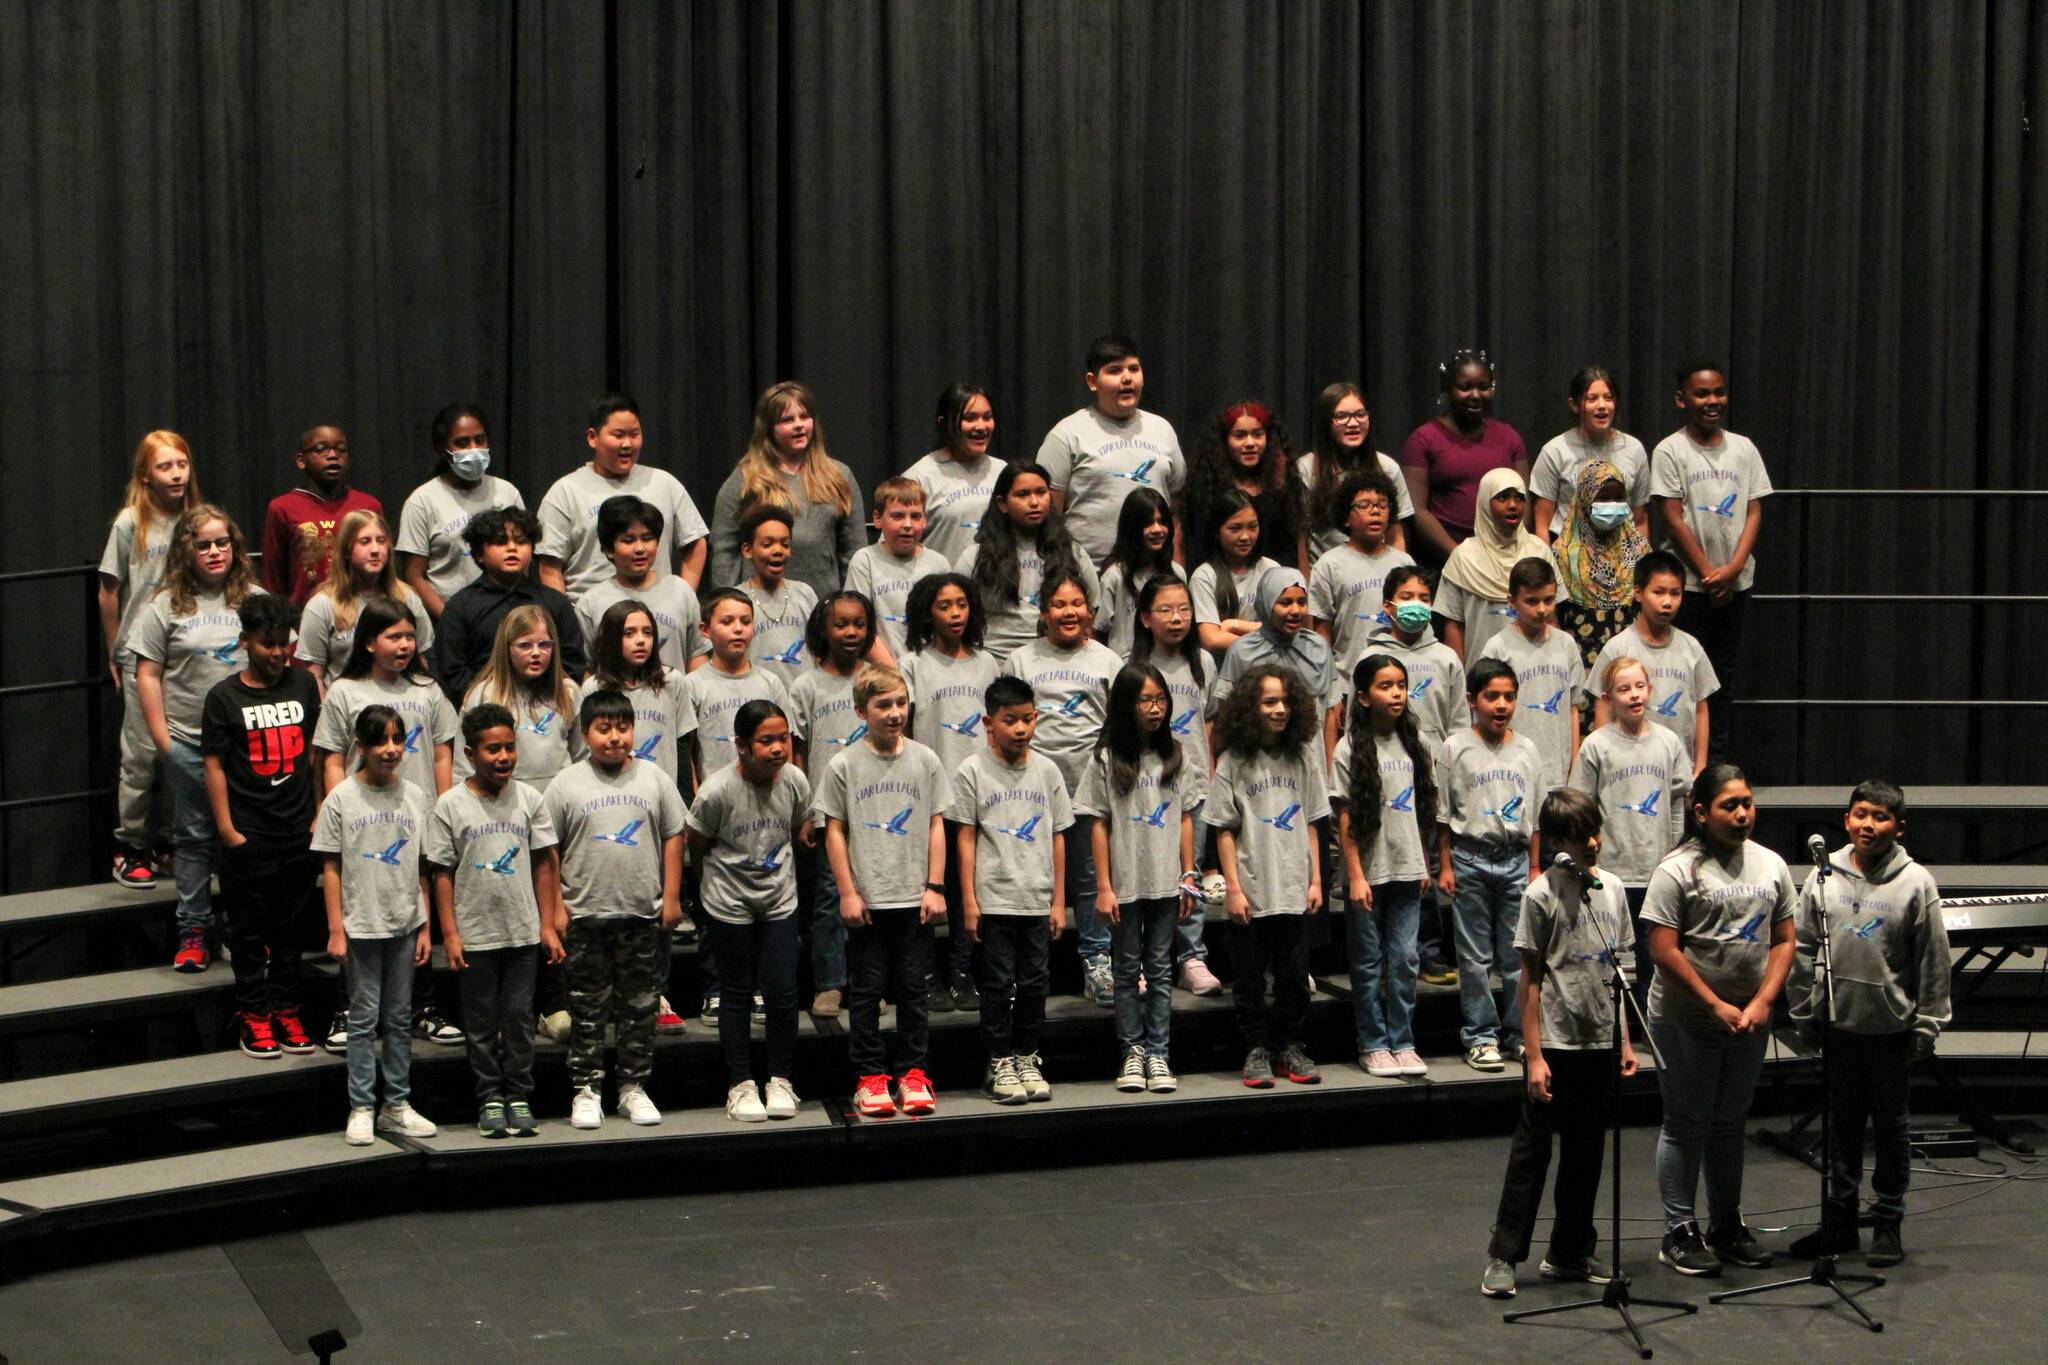 The Star Lake Elementary School choir performed “One Love” prior to Ferrell’s speech Thursday. Alex Bruell / The Mirror